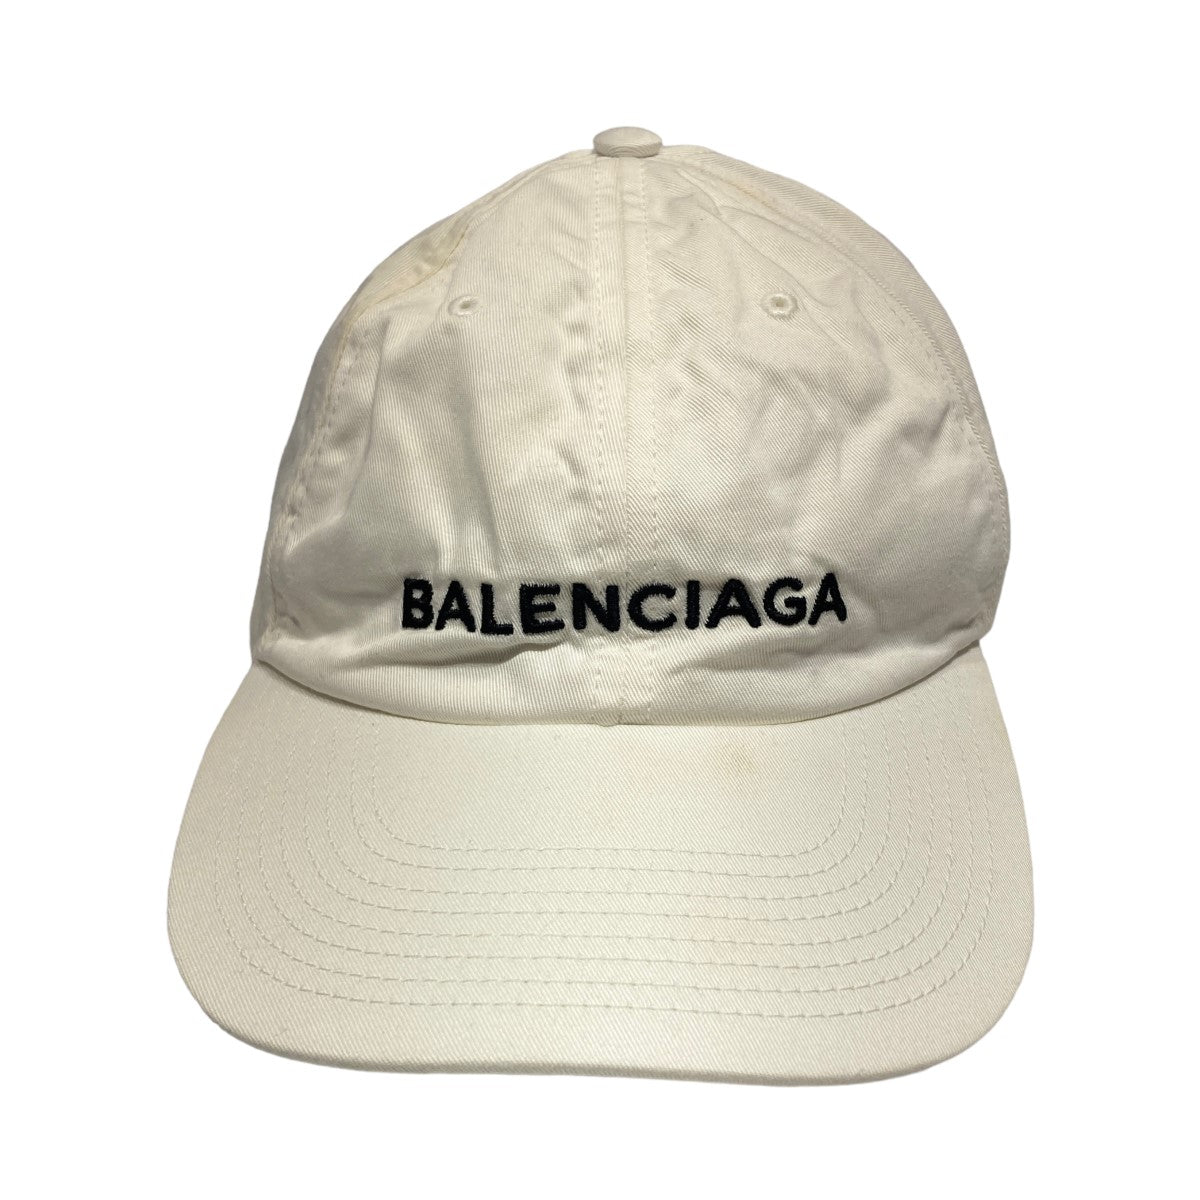 BALENCIAGA(バレンシアガ) 刺繍ロゴ エンブロイダリー キャップ 452245 